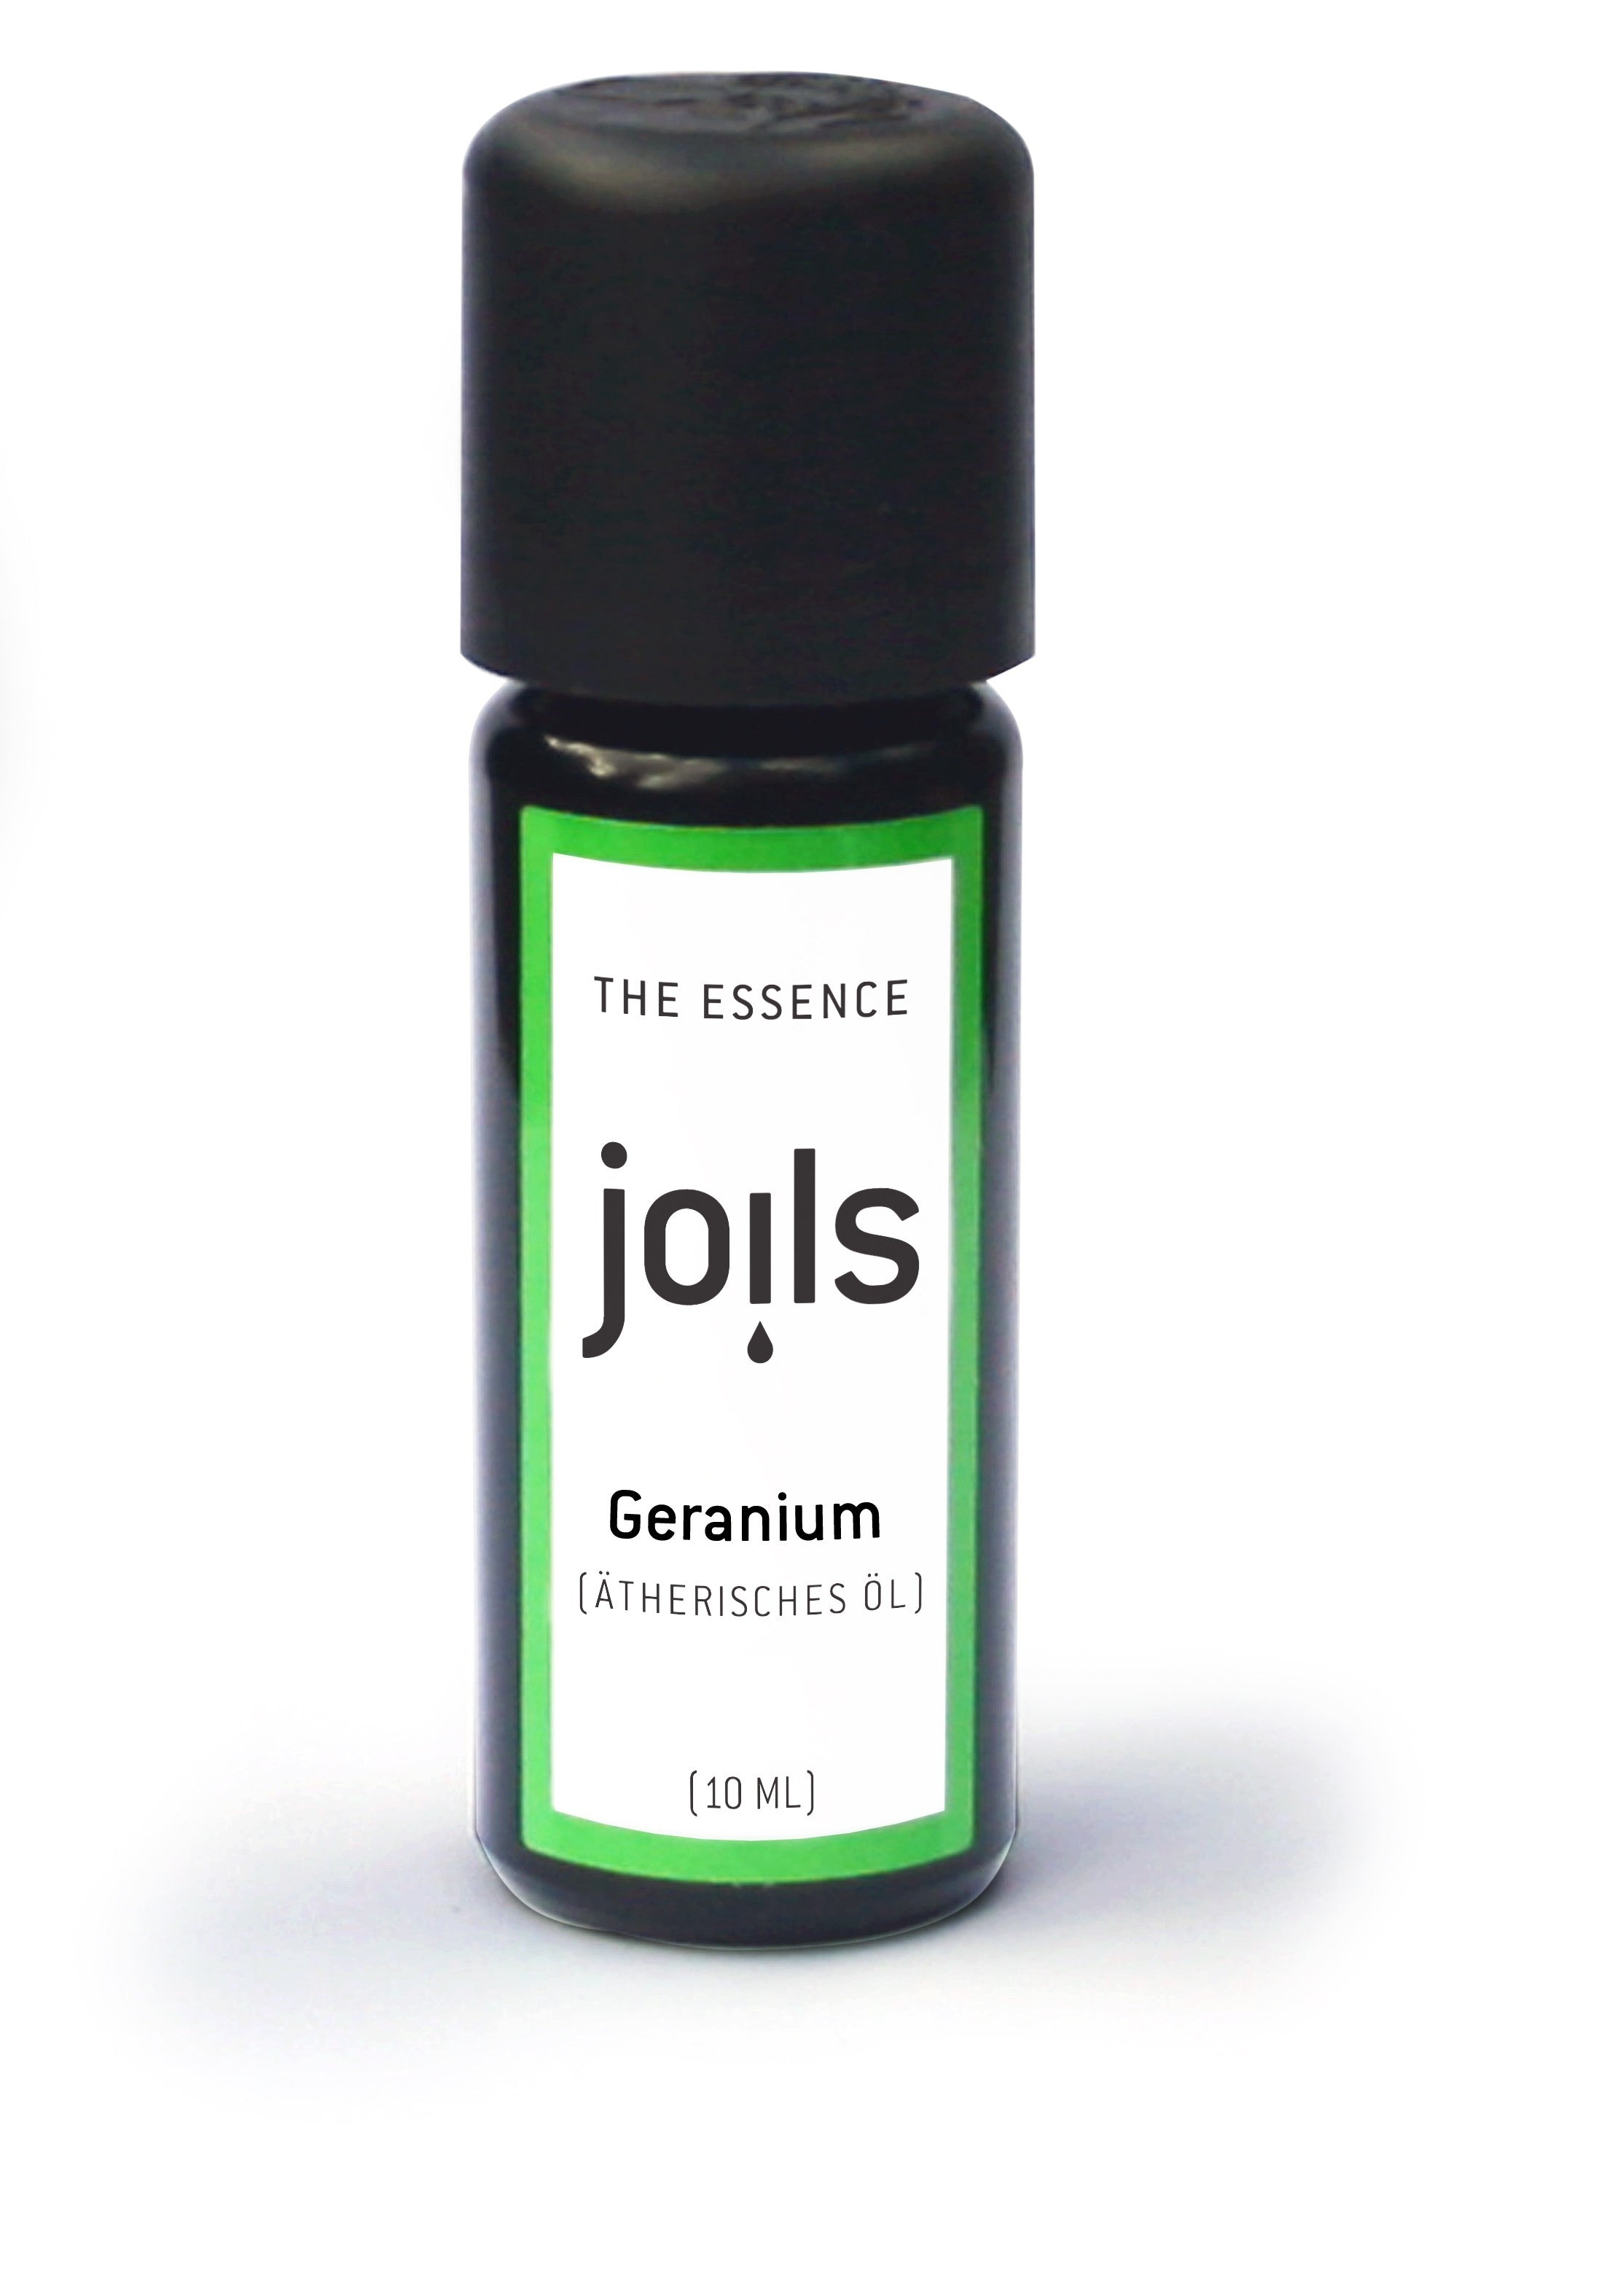 GERANIUM 10ml - Joils